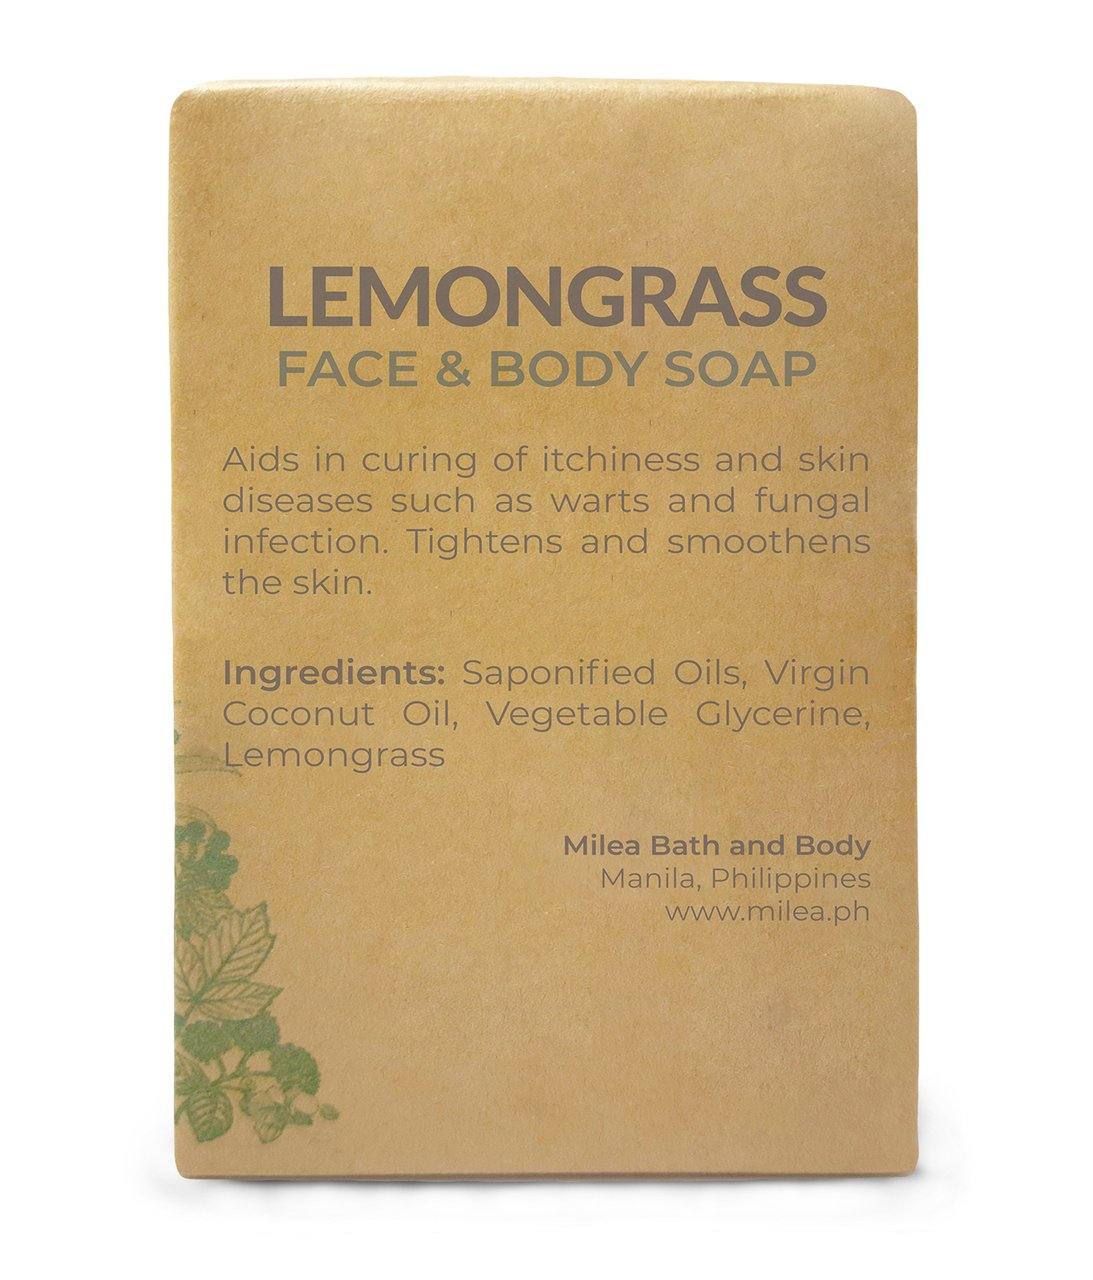 Lemongrass Fungicidal Soap Soaps Milea All Organics 